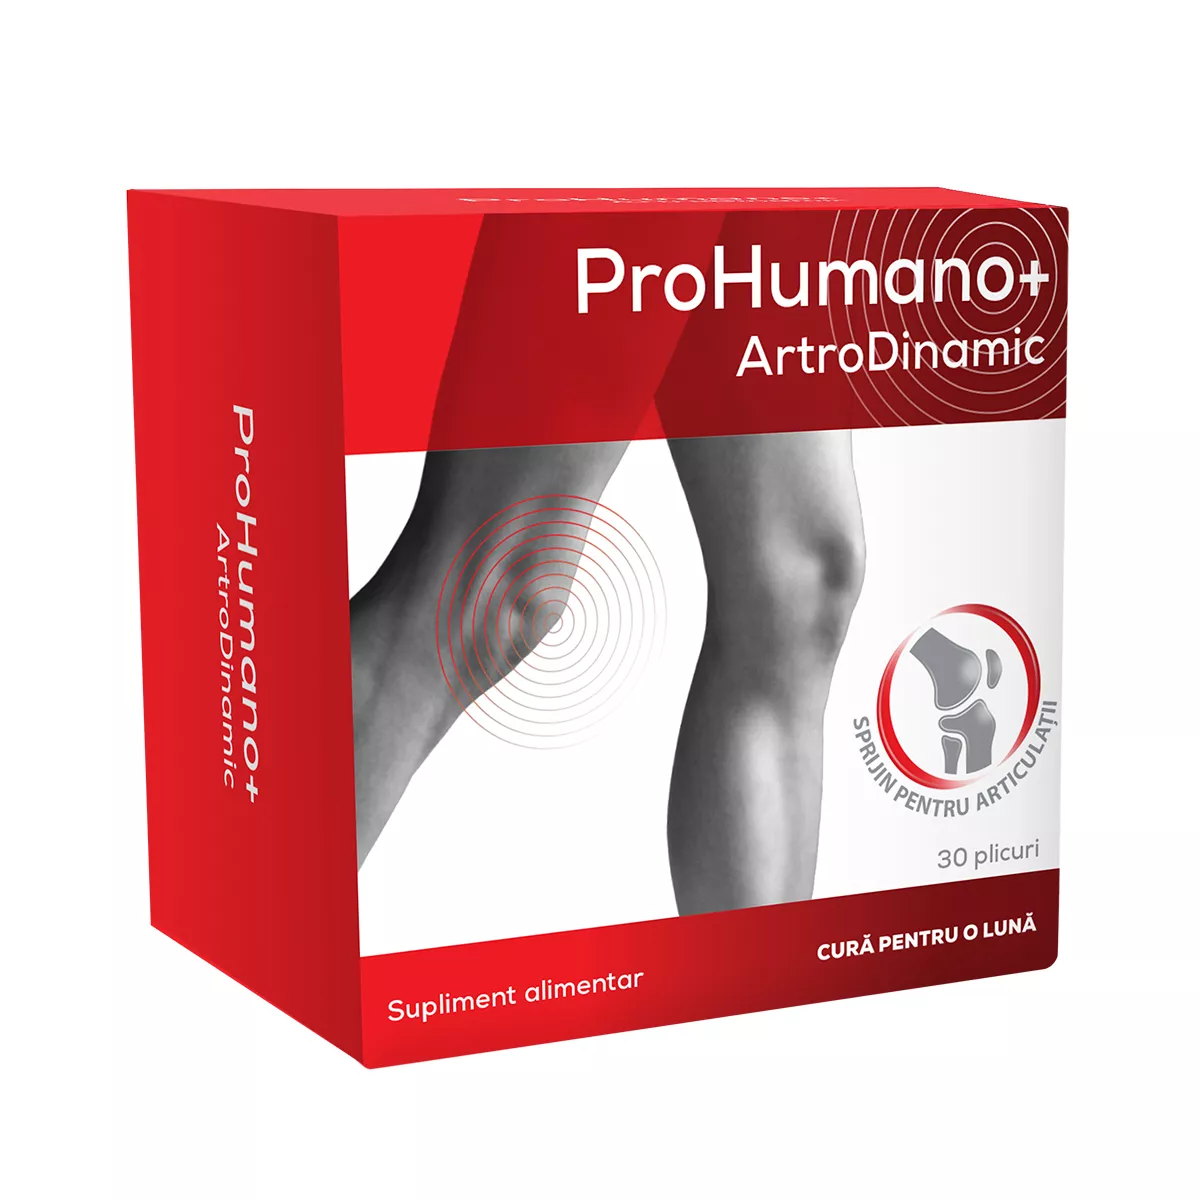 ArtroDinamic ProHumano+, 30 plicuri, Pharmalinea, [],nordpharm.ro